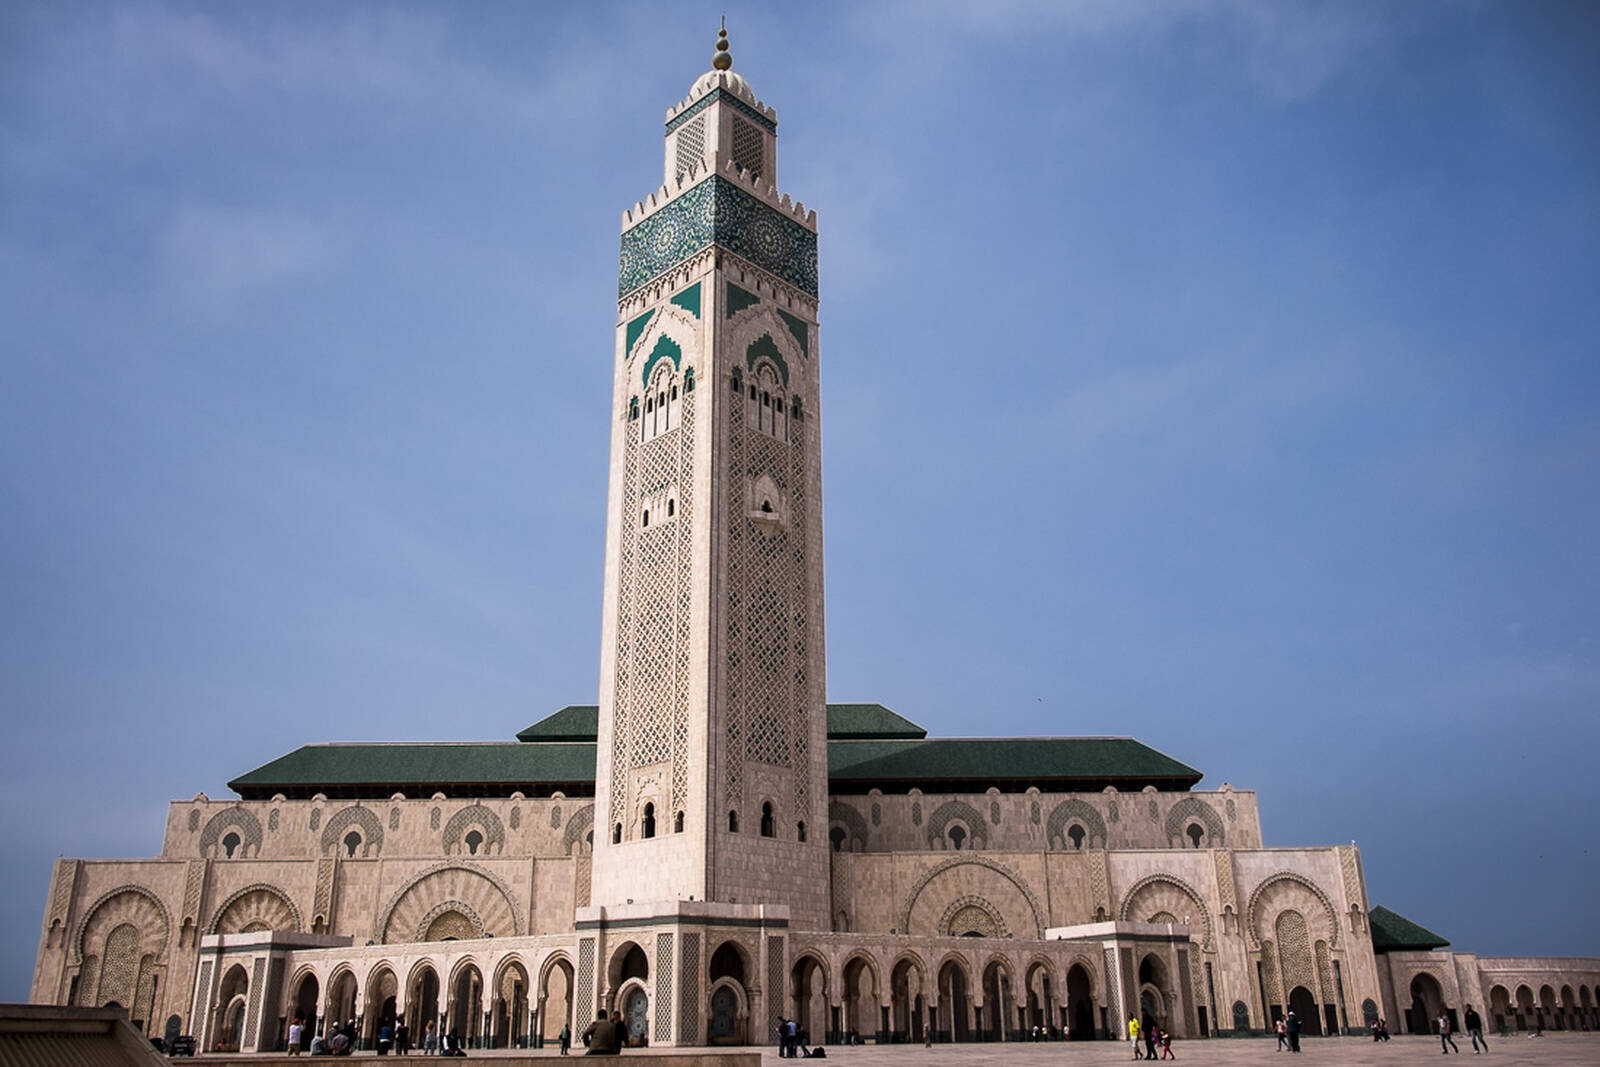 Image of Hassan II Mosque by Darlene Hildebrandt